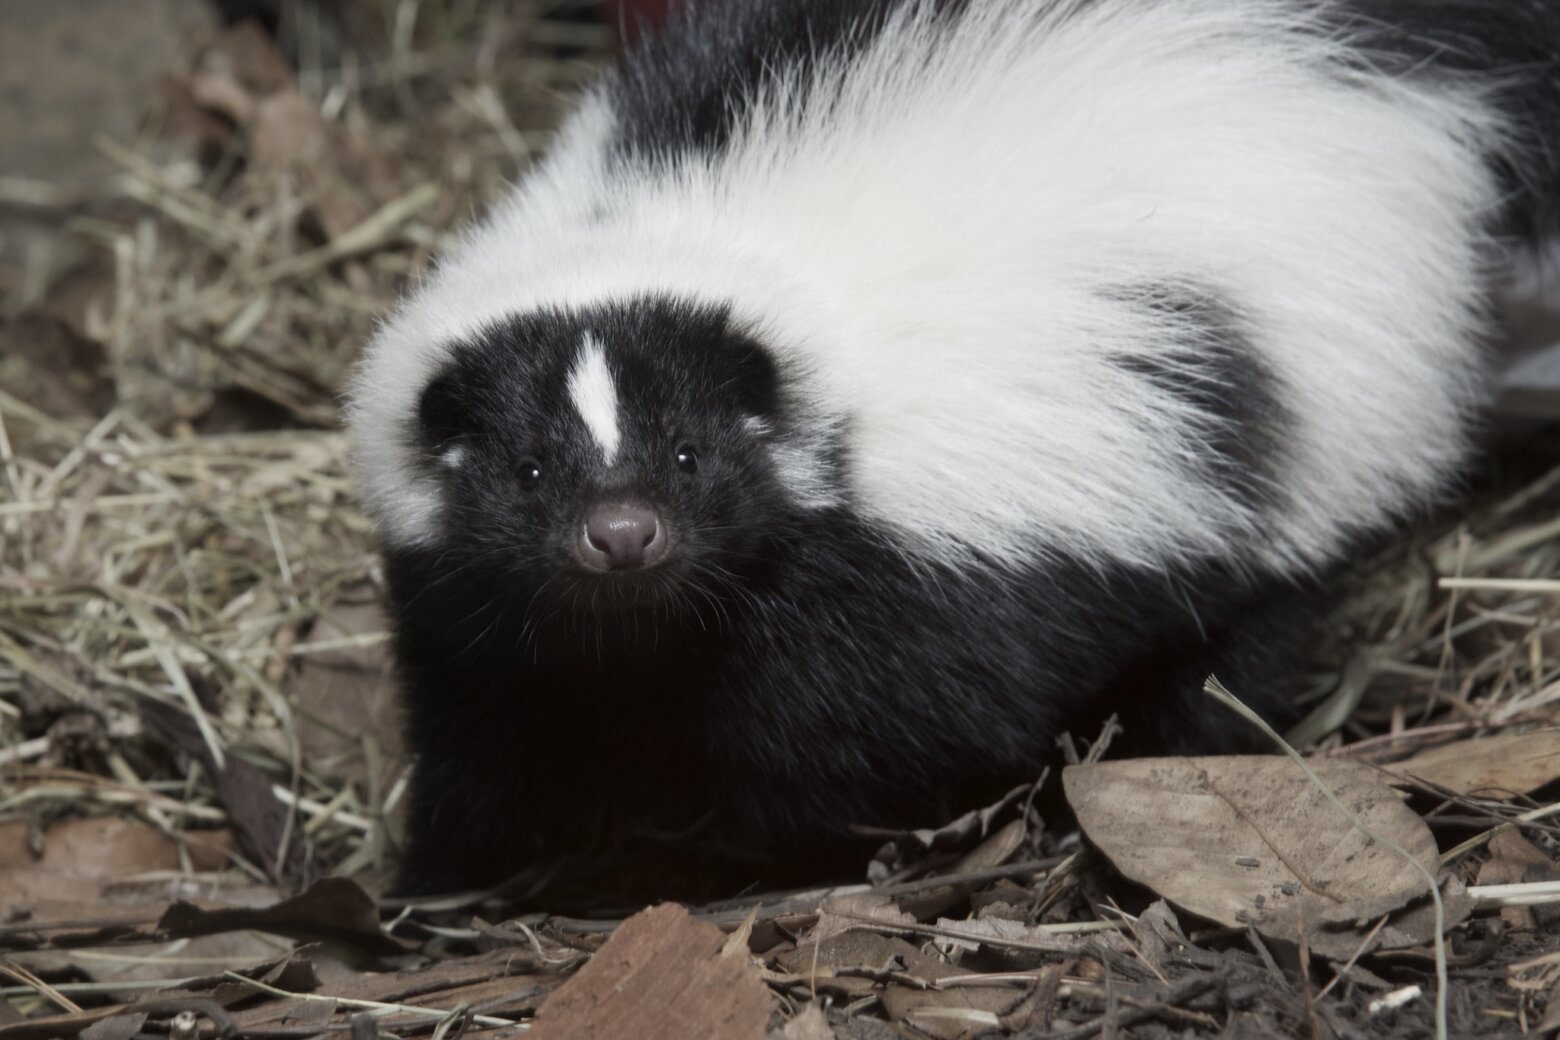 Rabid skunk found in Odenton community